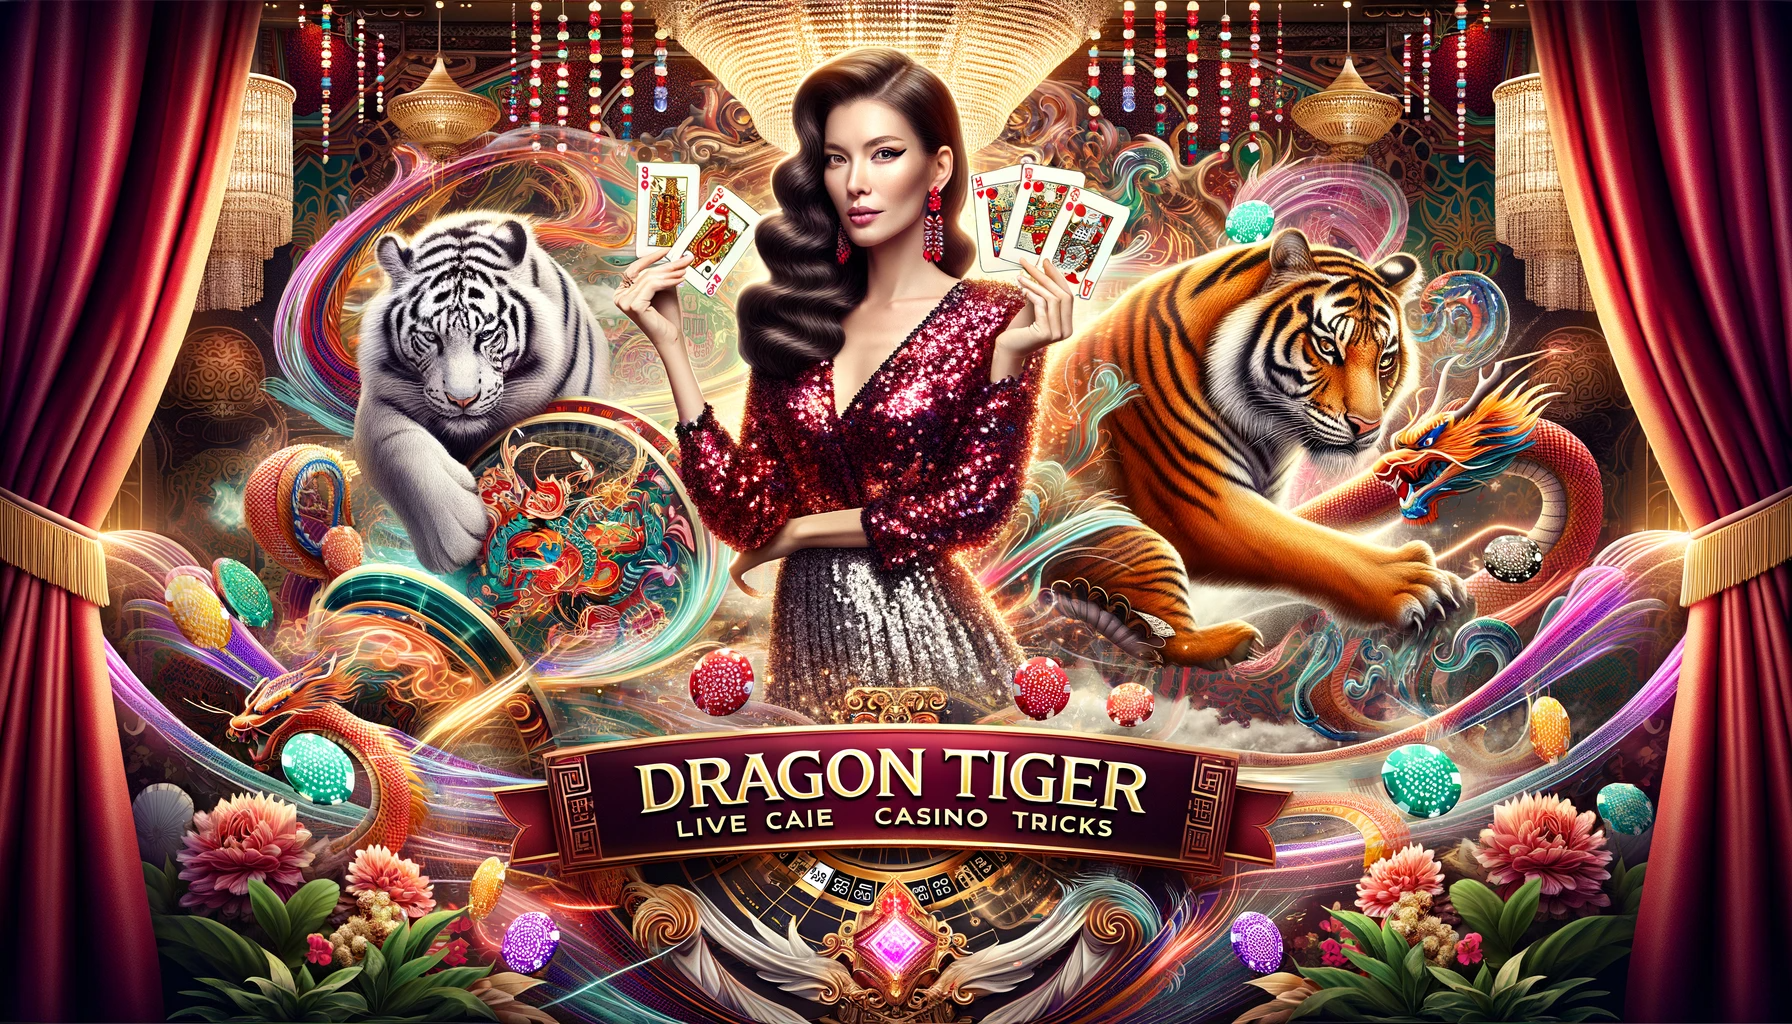 Dragon Tiger Live Casino Tricks